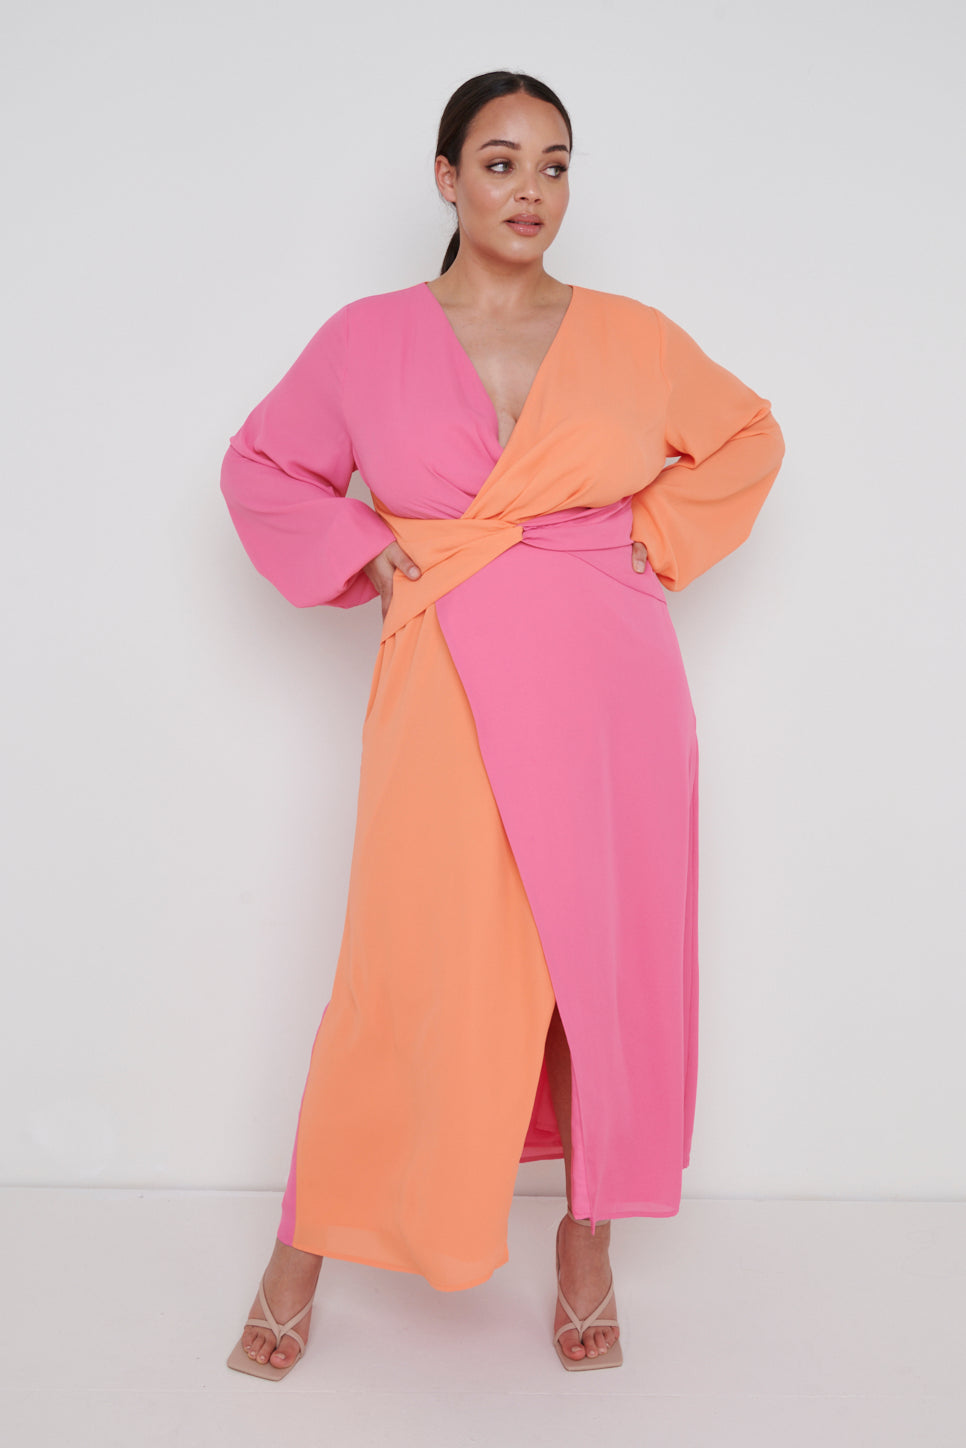 Frieda Knot Contrast Dress Curve - Orange and Pink